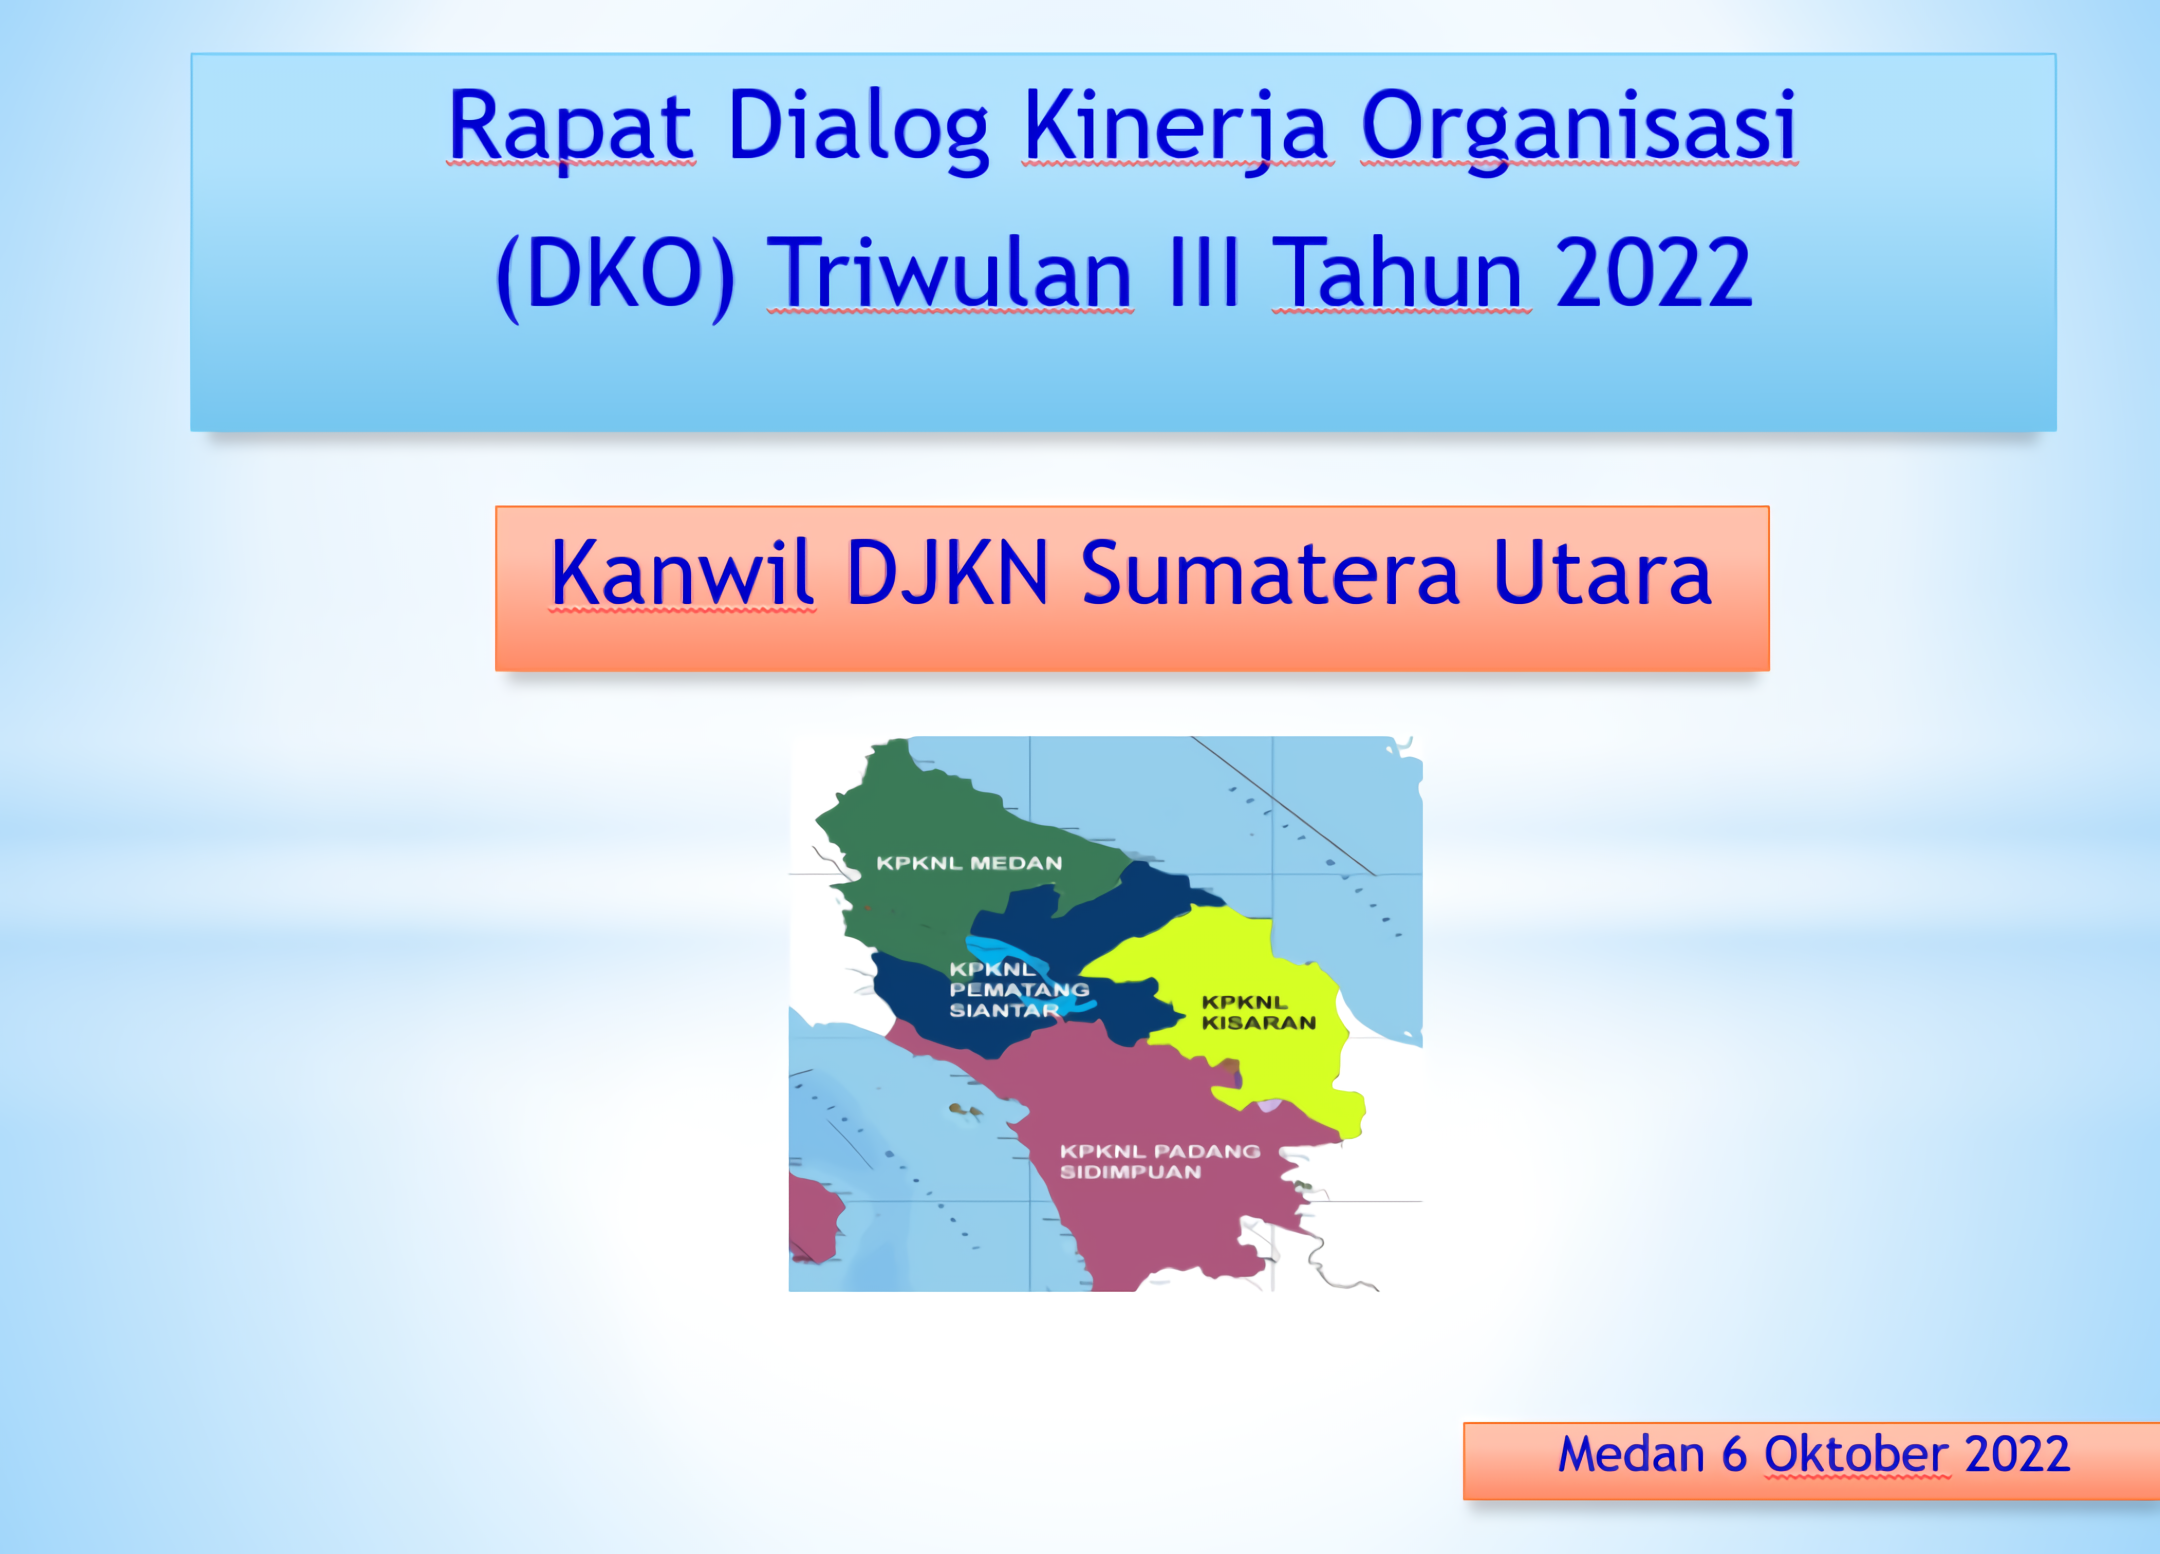 Kanwil DJKN Sumatera Utara adakan Rapat Dialog Kinerja Organisasi (DKO) Triwulan III tahun 2022 